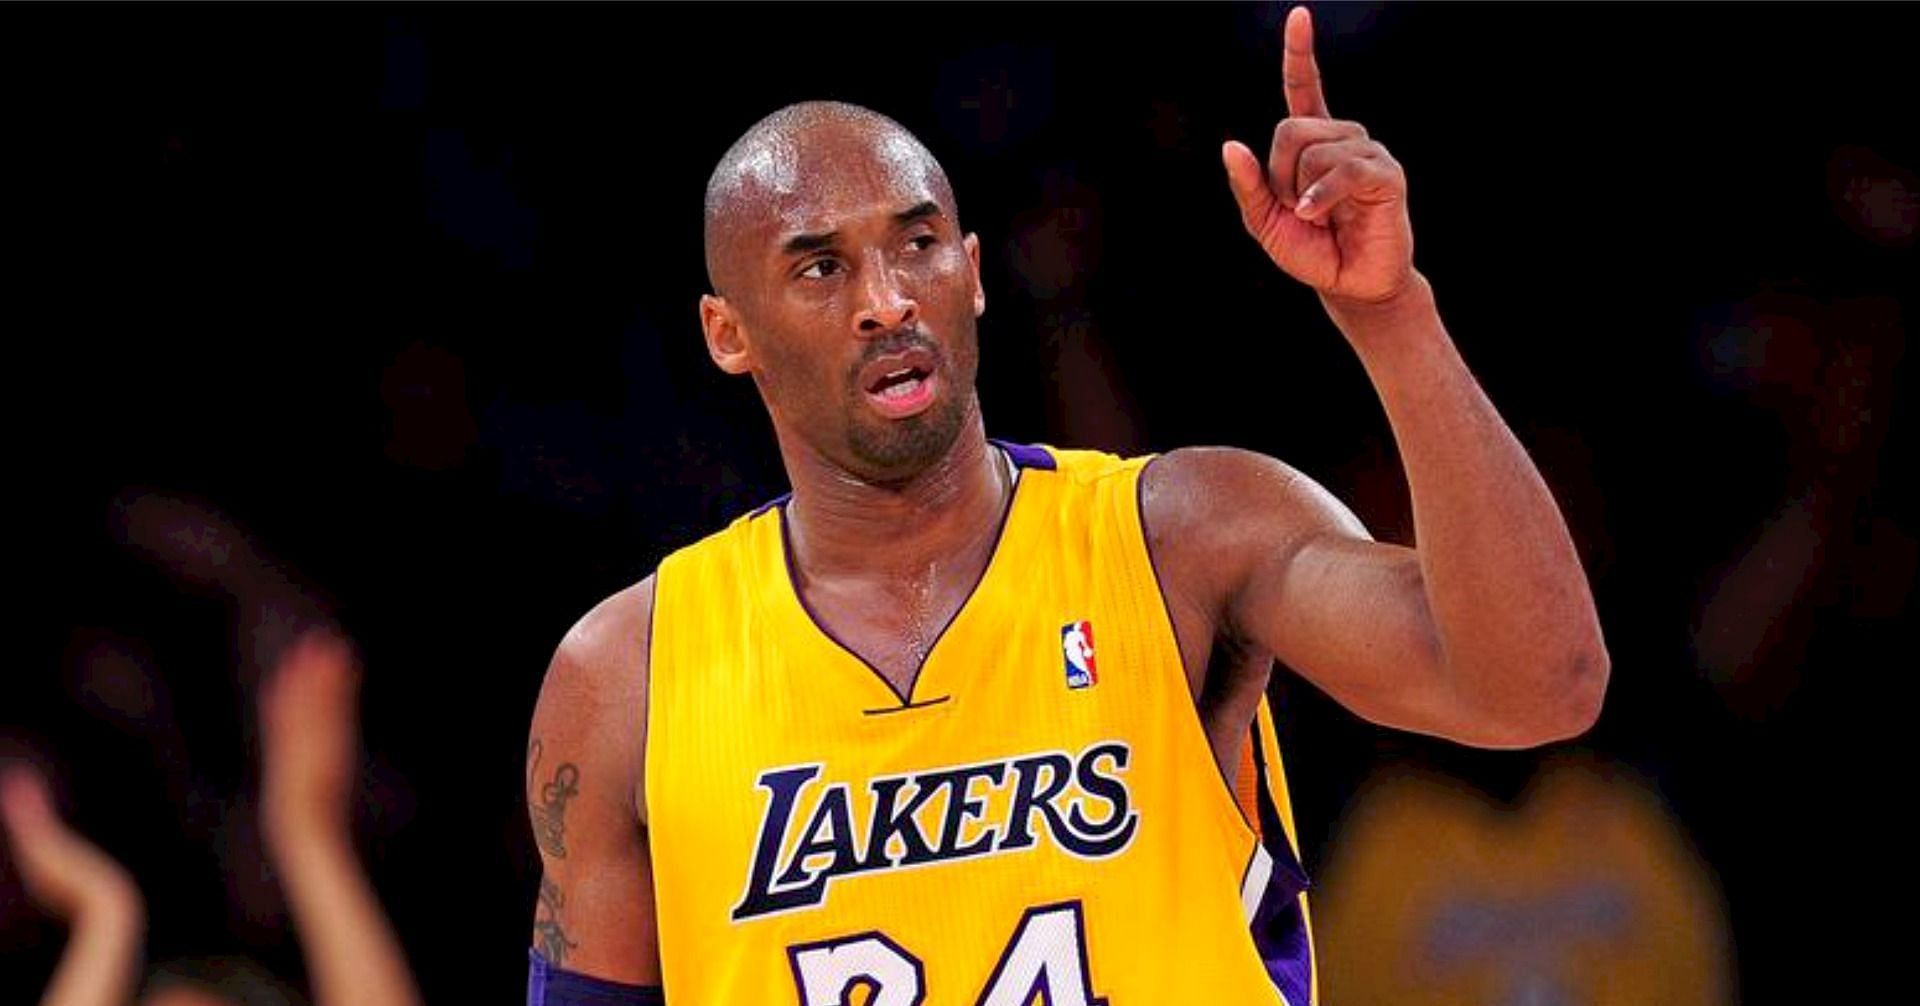 Lakers legend Kobe Bryant